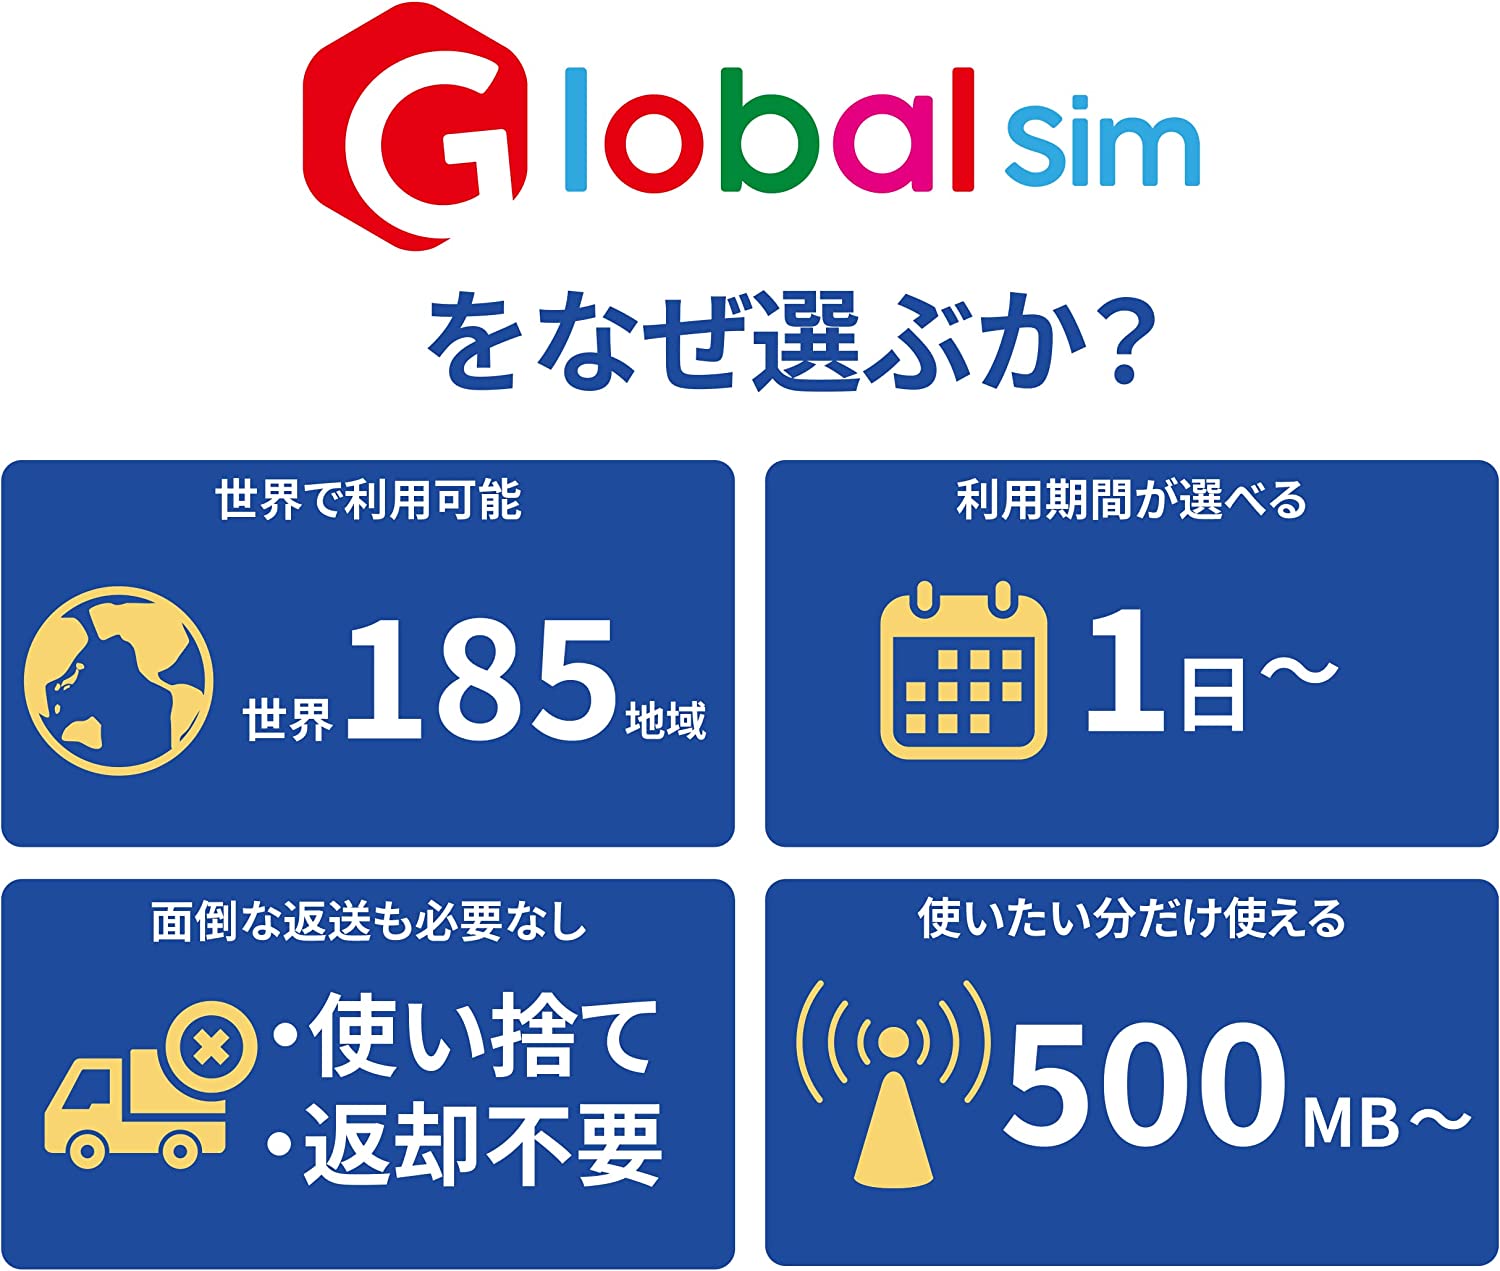 GLOBAL SIM シンガポール マレーシア タイ 5日間 データ無制限 (1GB 日高速）（容量を使い切っても利用期間内は最大384kbps） データ通信専用 シムフリー端末のみ対応 追加費用なし・契約不要